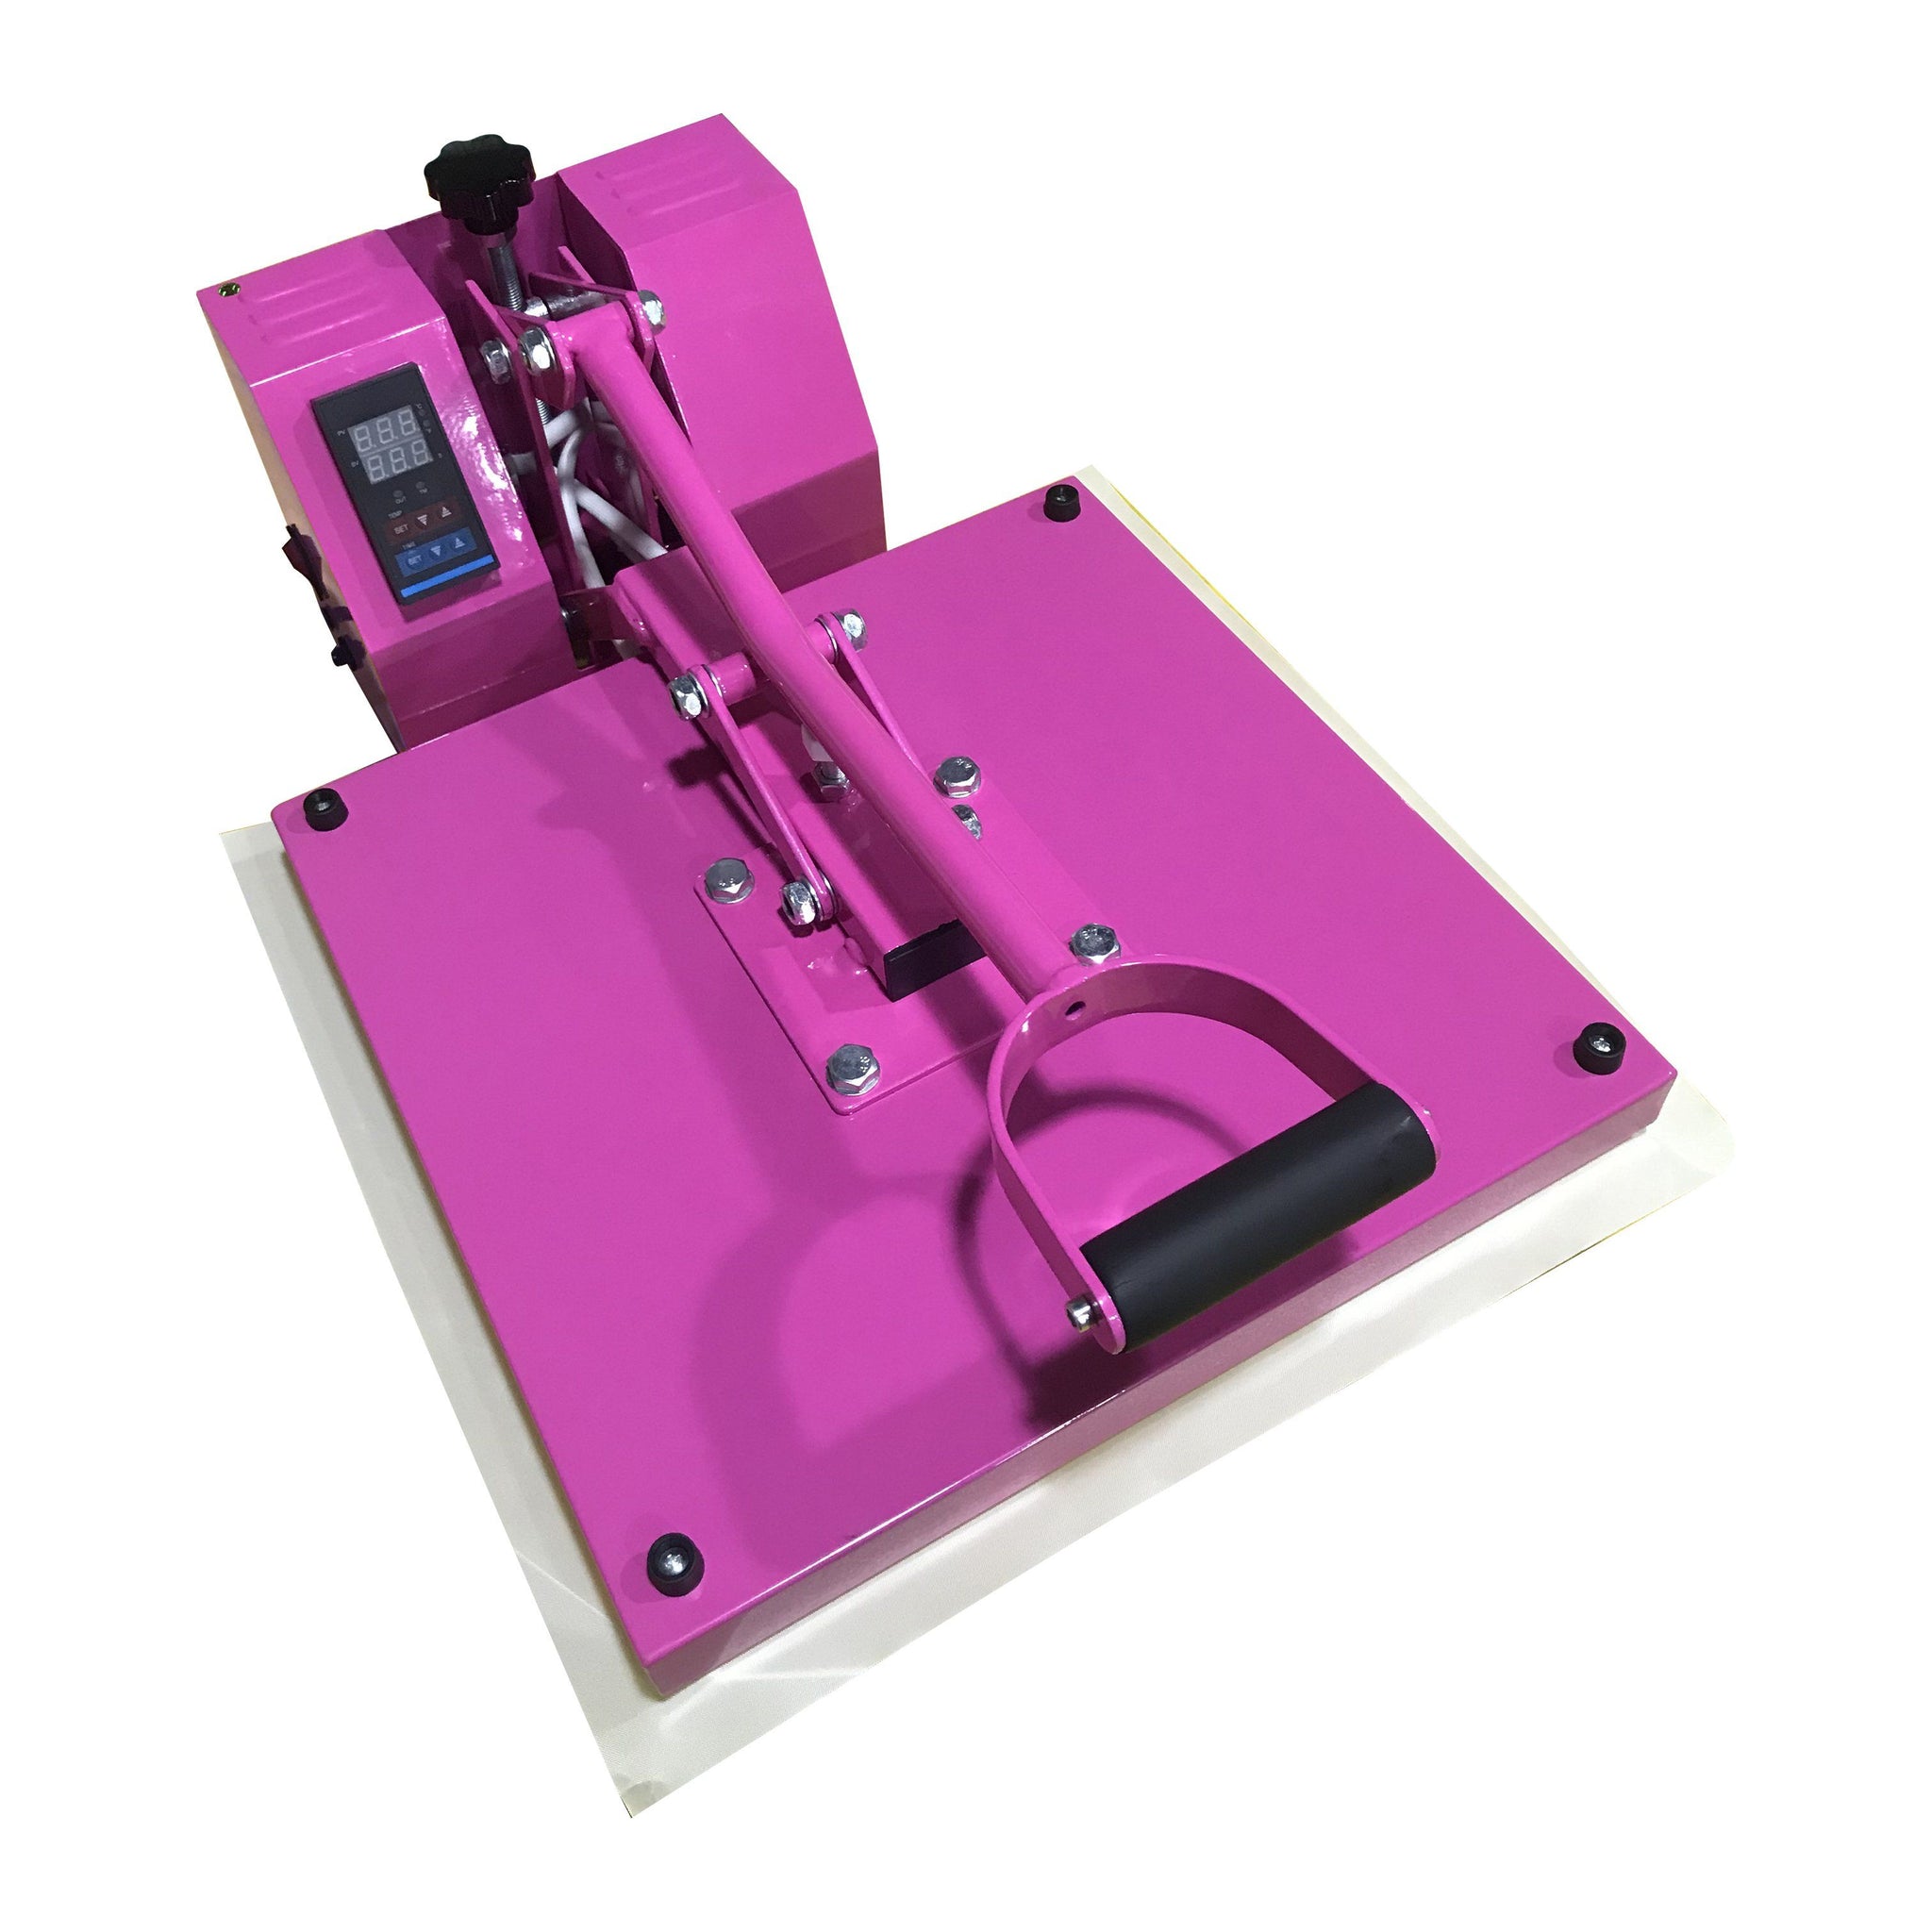 BetterSub Print T-Shirt Machine DIY Digital Industrial Quality Heat Press  Machine Clamshell Transfer Sublimation Print Press Machine 15''x 15'' Pink